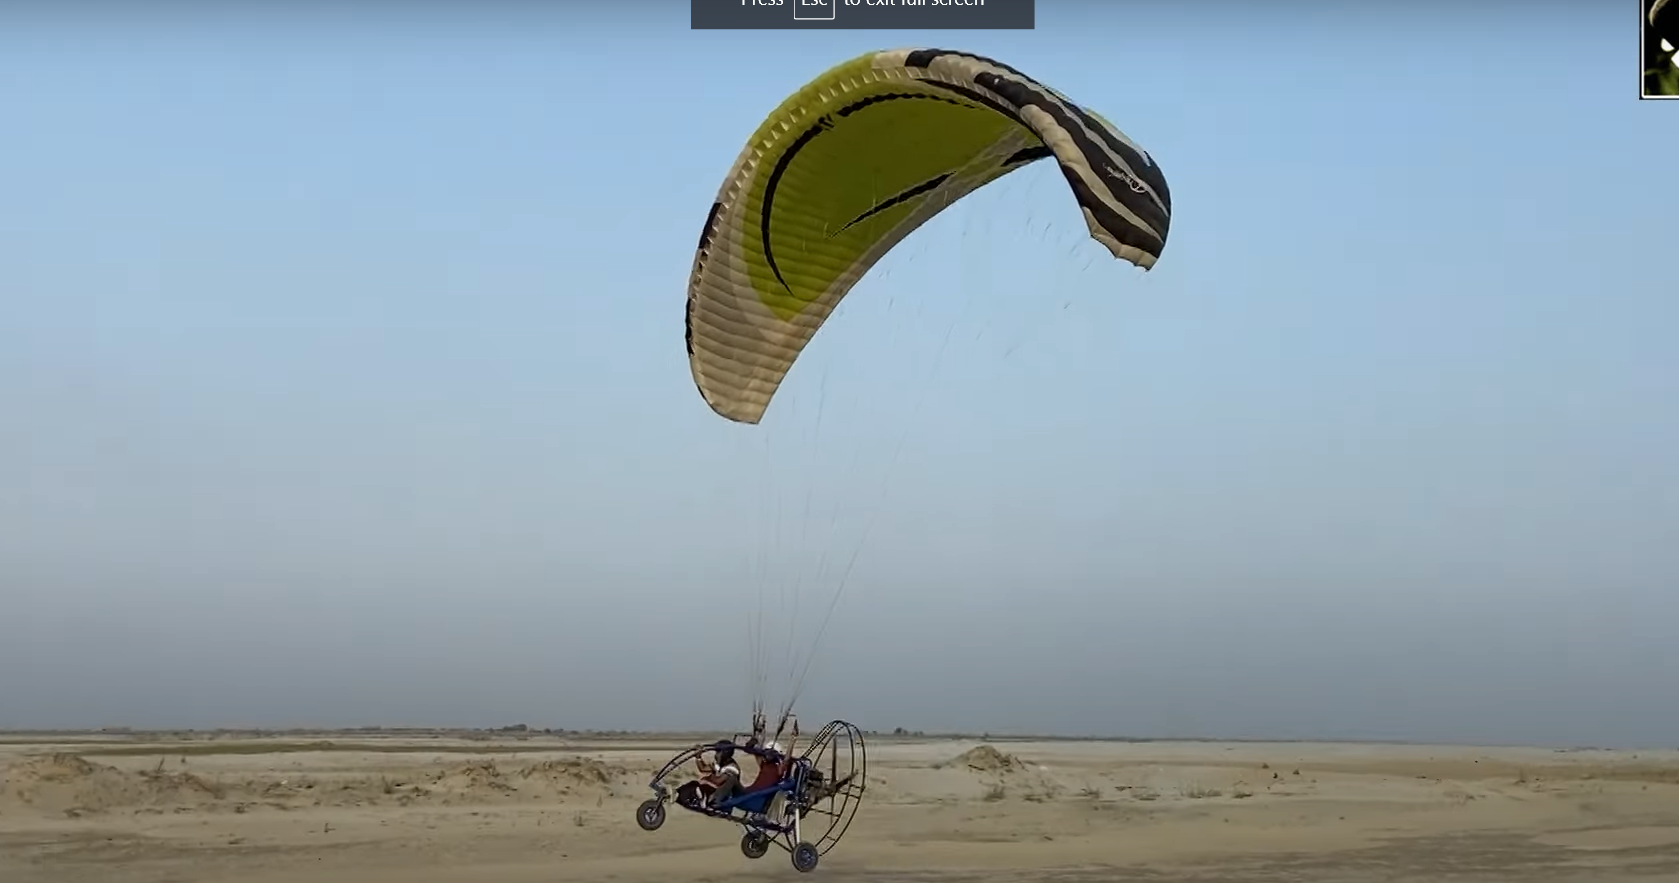 Ayodhya Paragliding News Update: